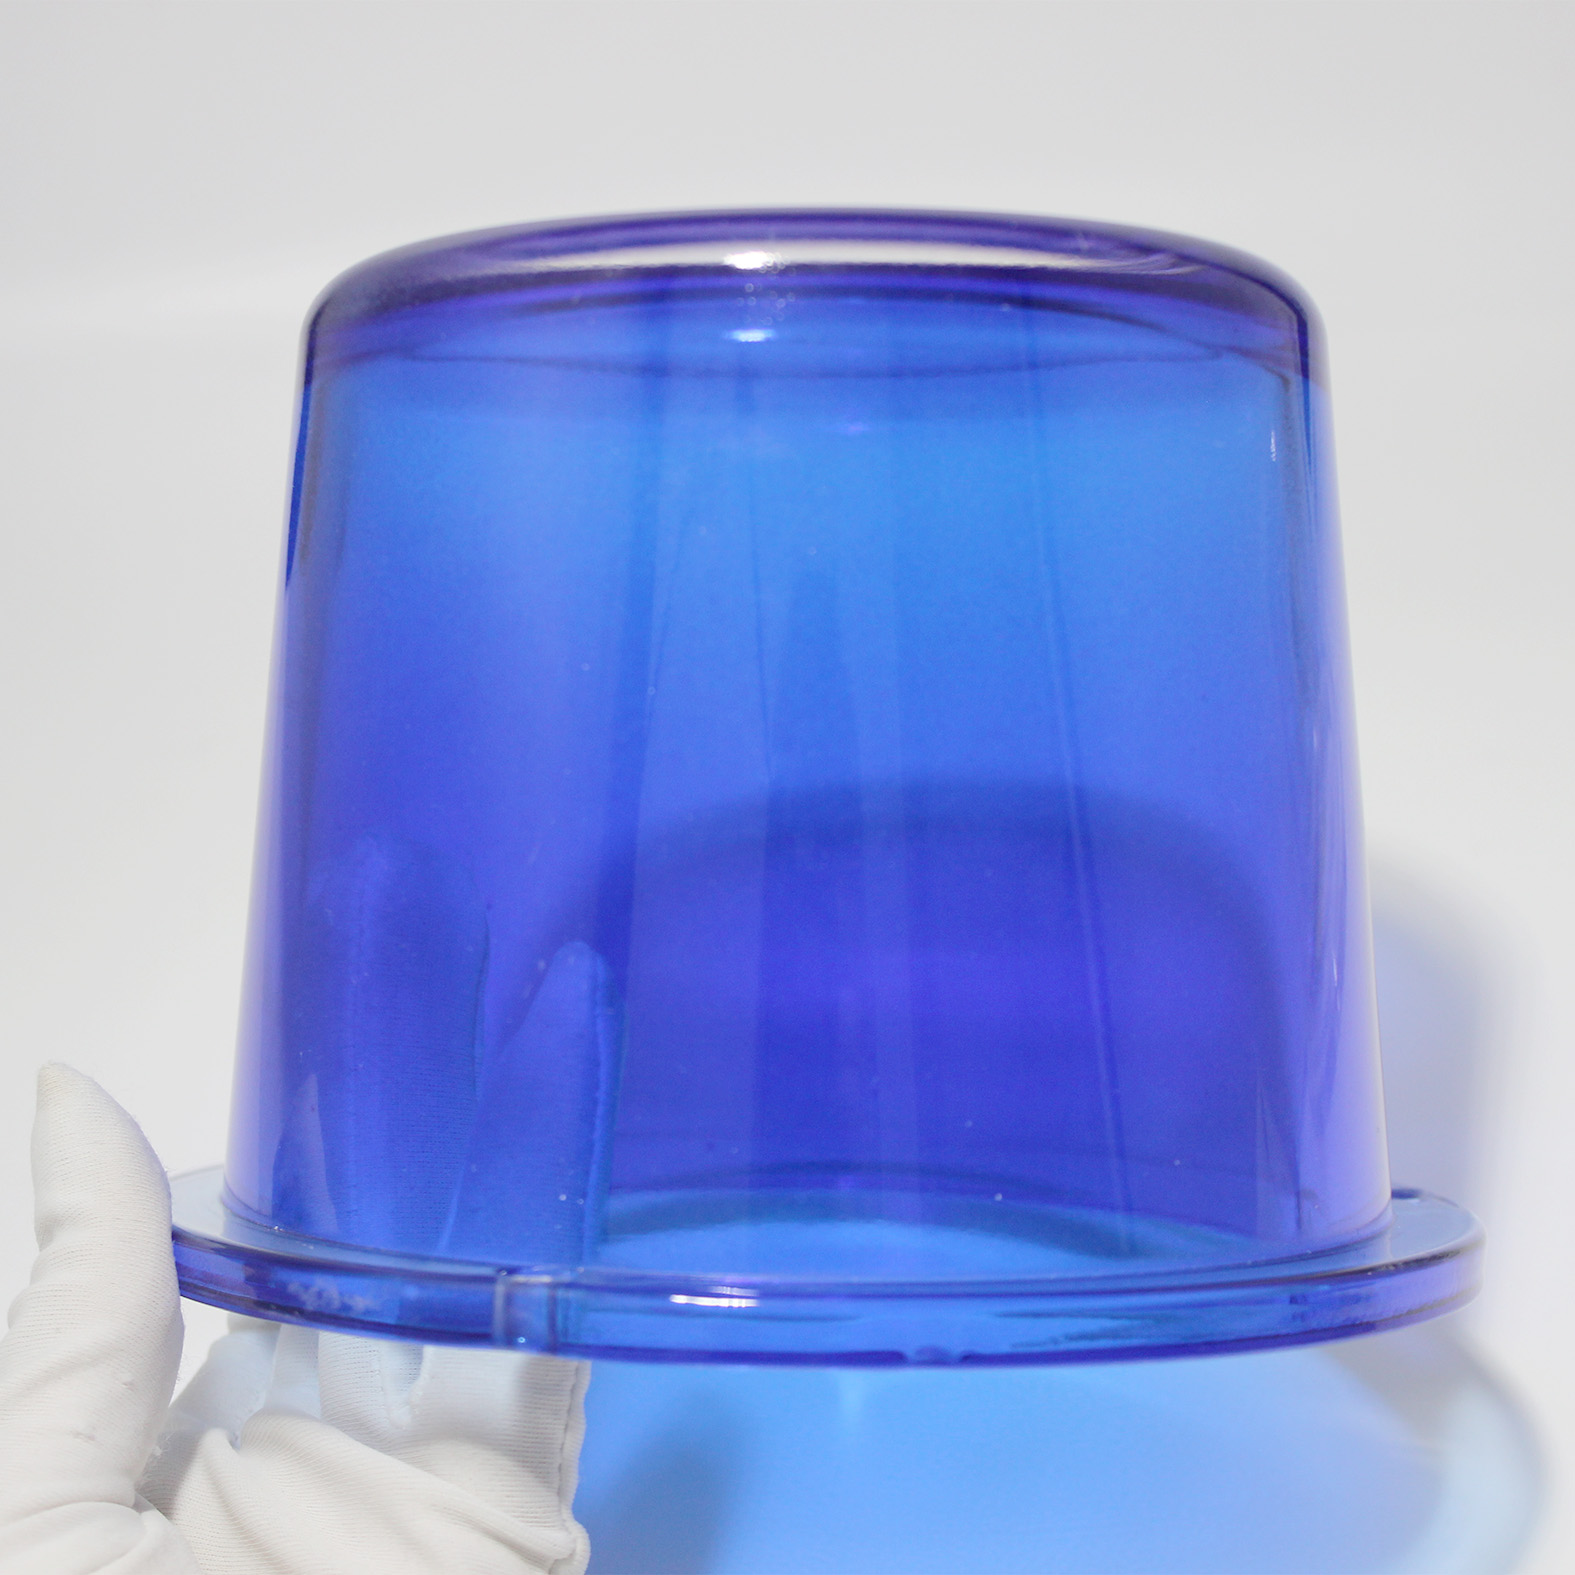 China Factory Explosion-proof Lighting Quartz Glass Dome Lens